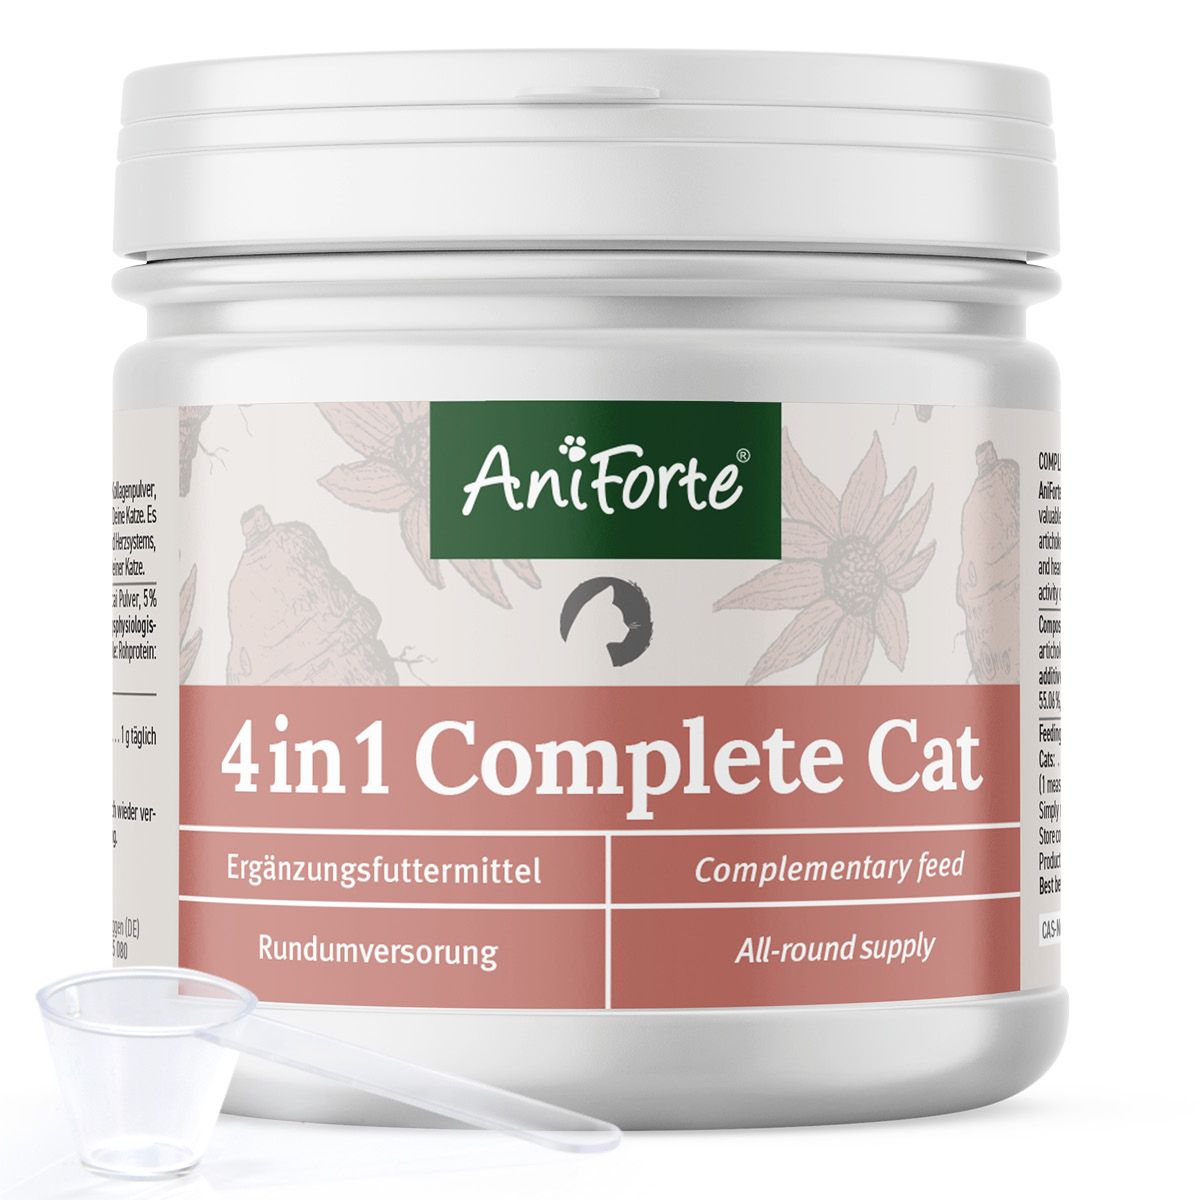 AniForte 4in1 Complete Cat